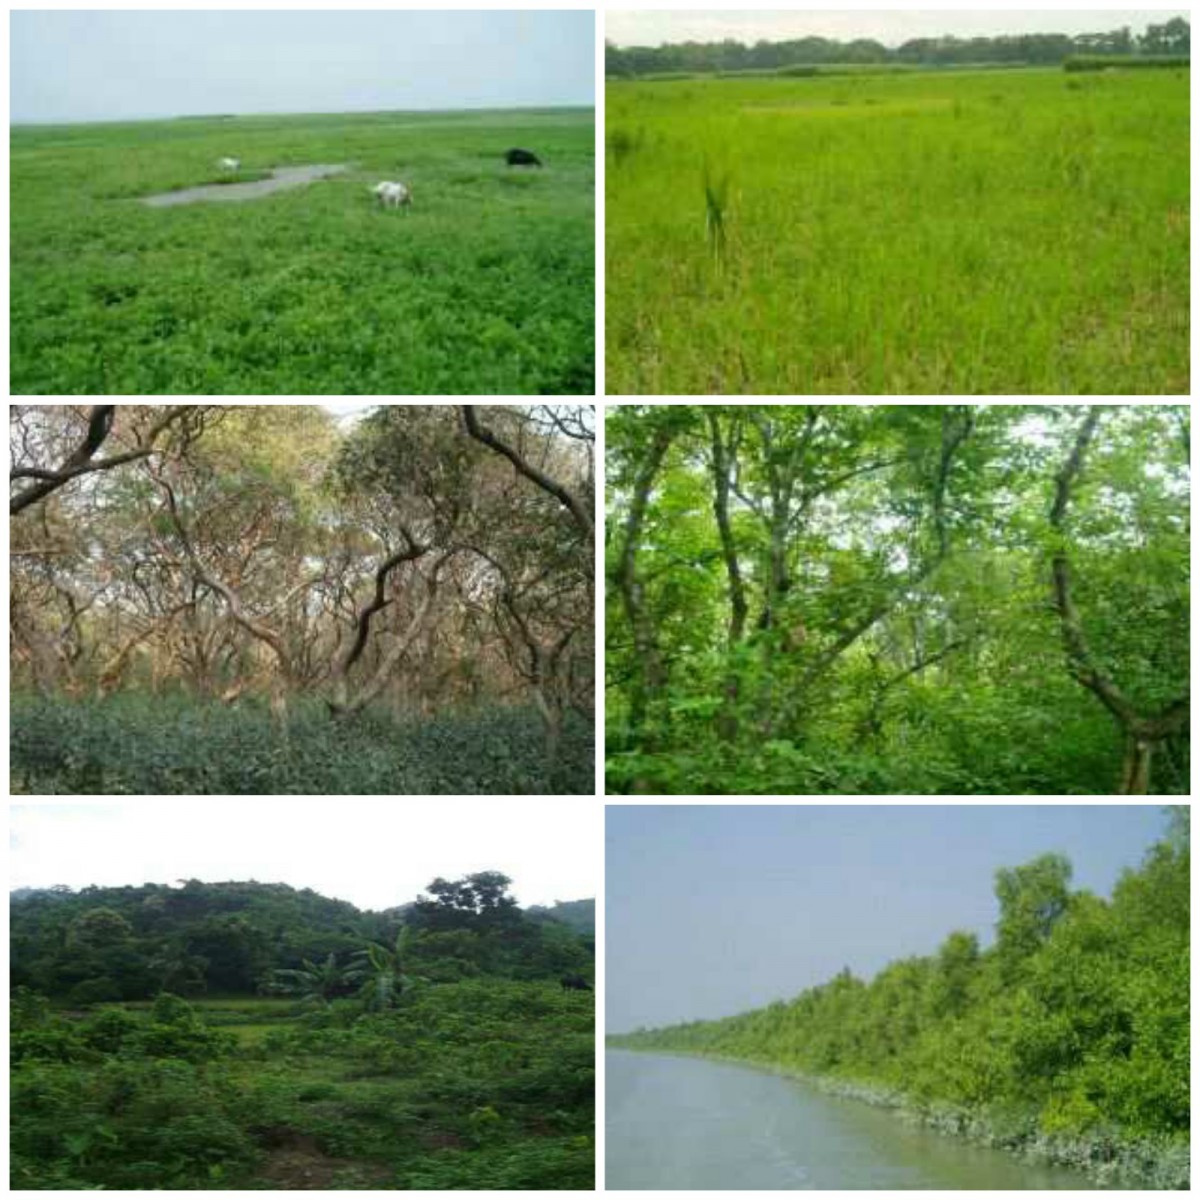 types of vegetation